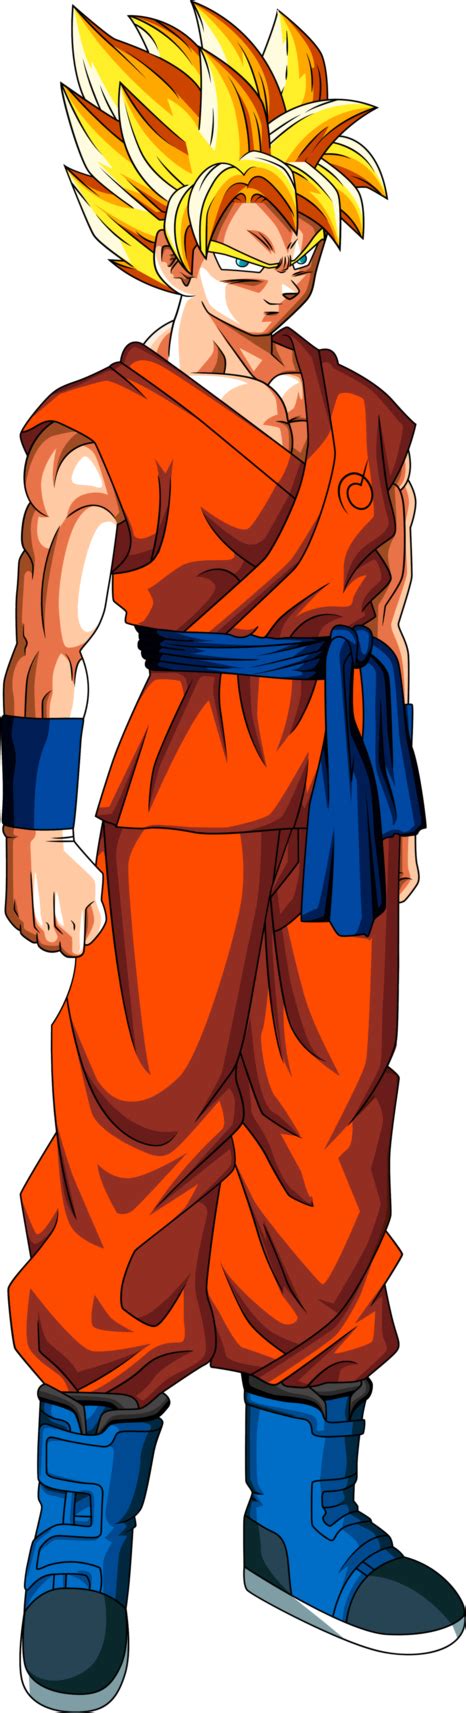 Imagen Goku Ssj1 Dbspng Dragon Ball Fanon Wiki Fandom Powered By